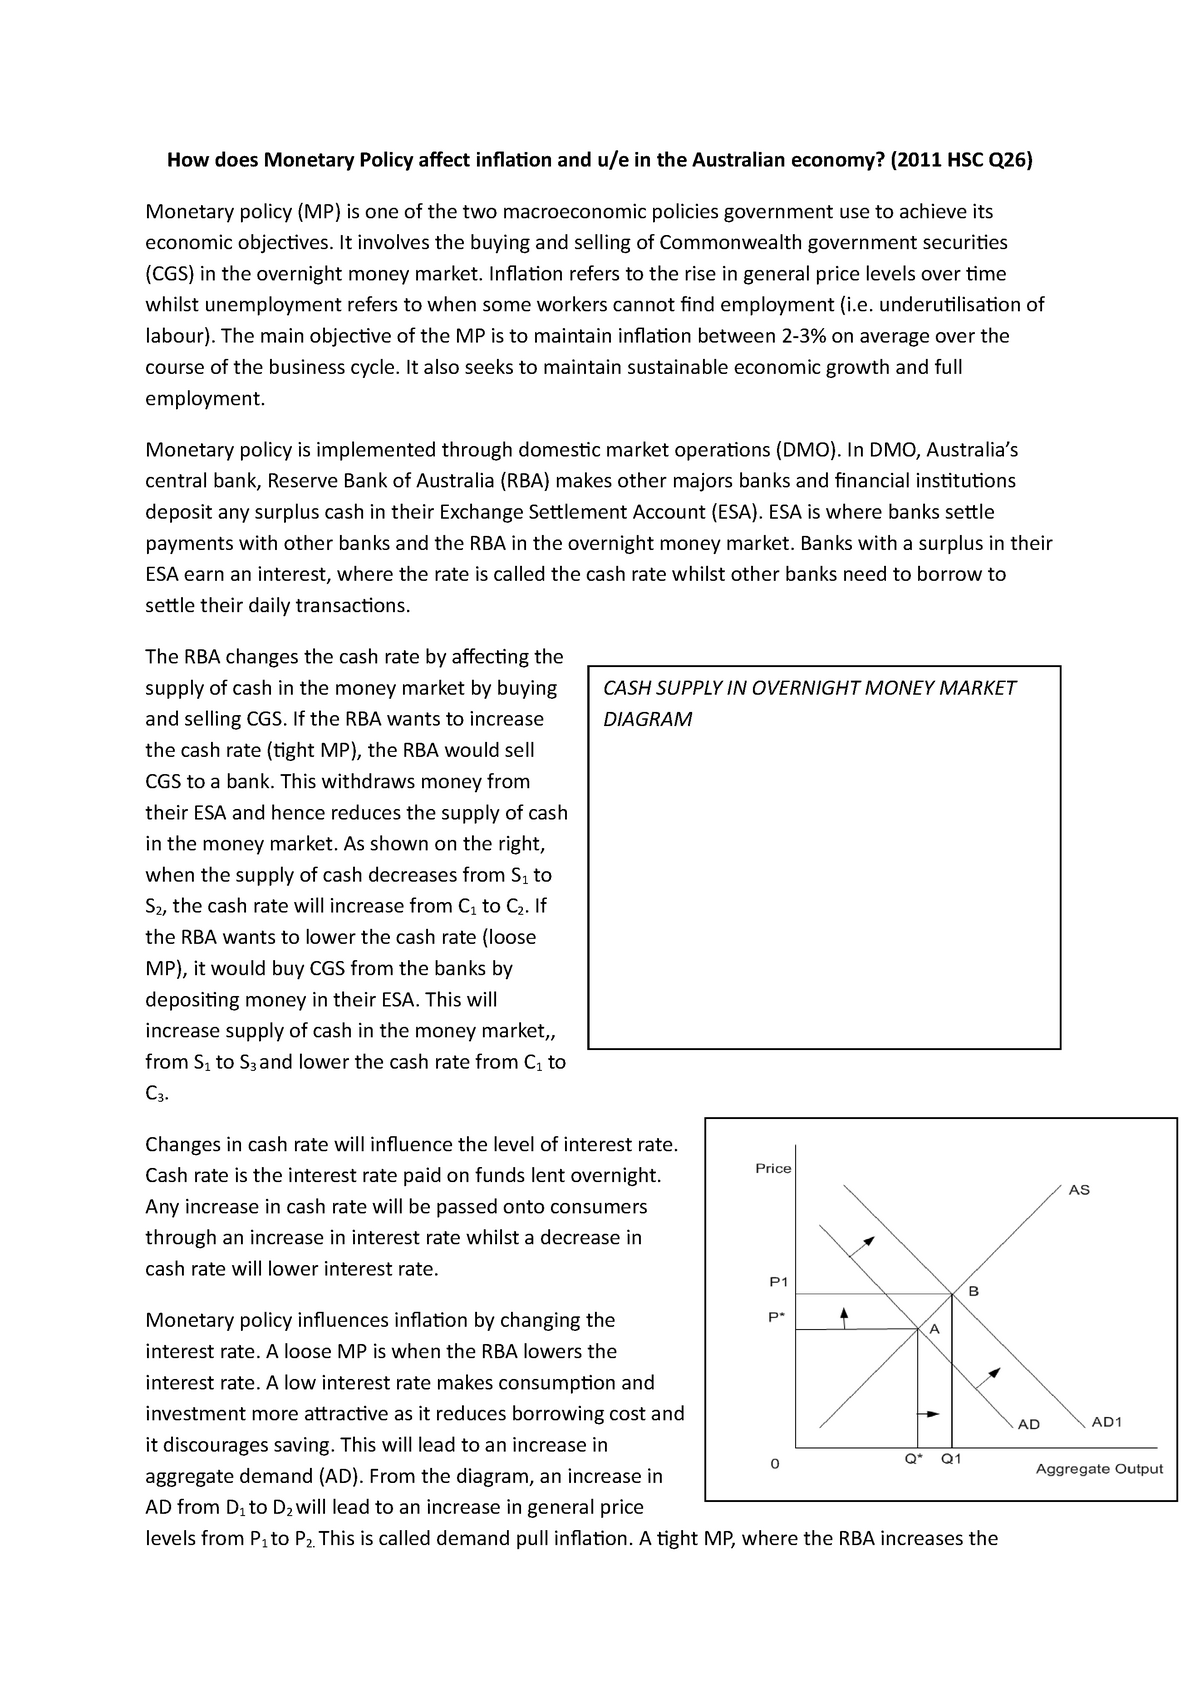 monetary policy essay pdf